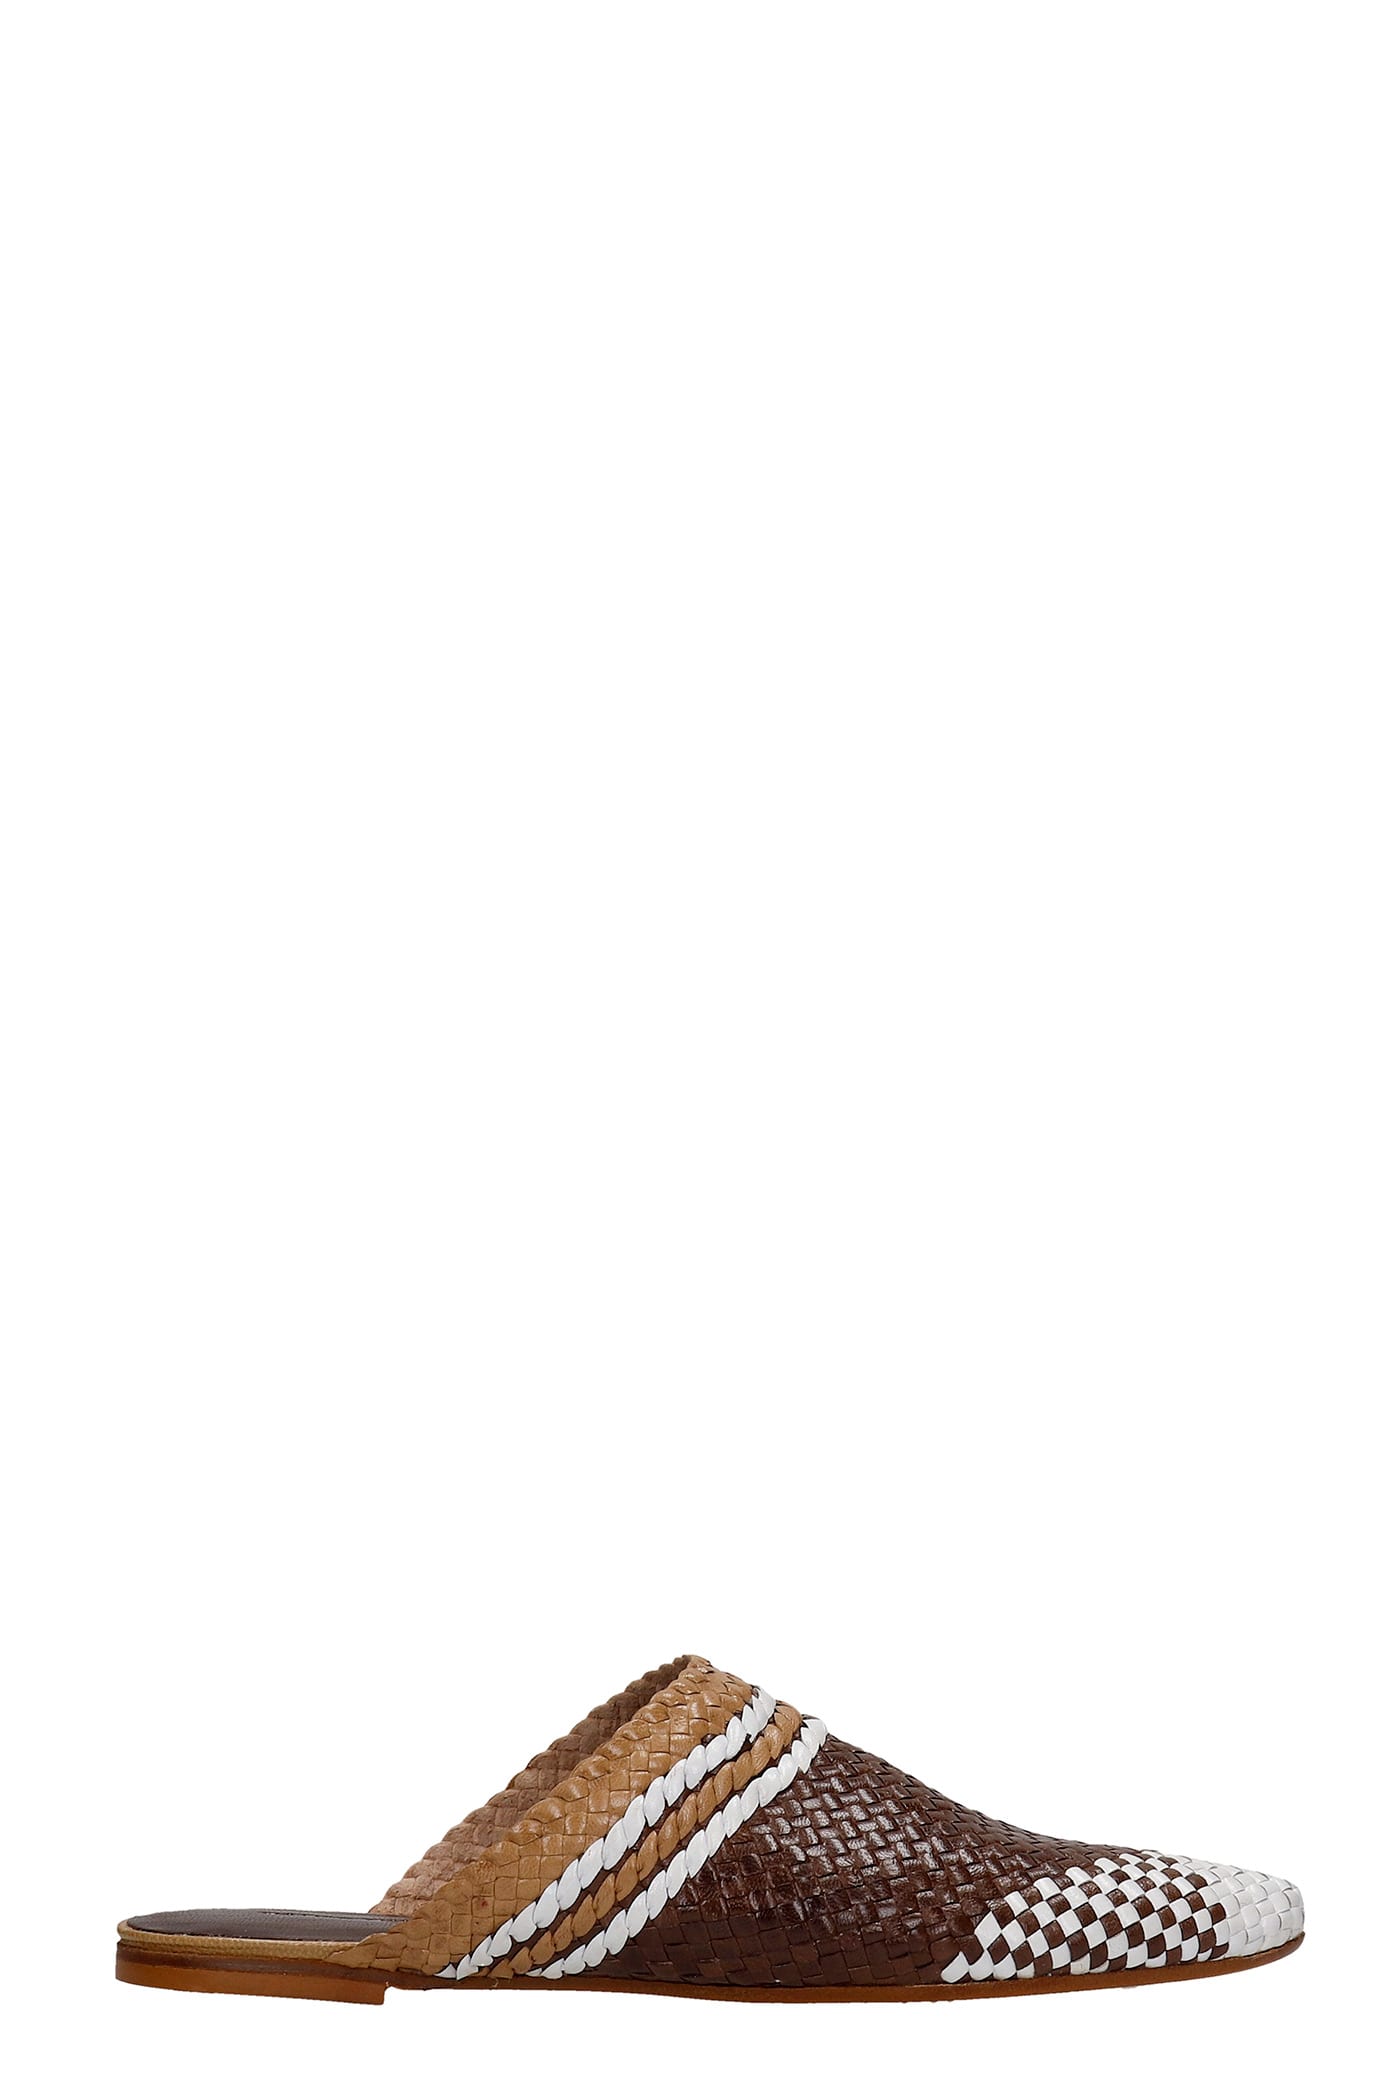 Fabio Rusconi Loafers In Brown Leather